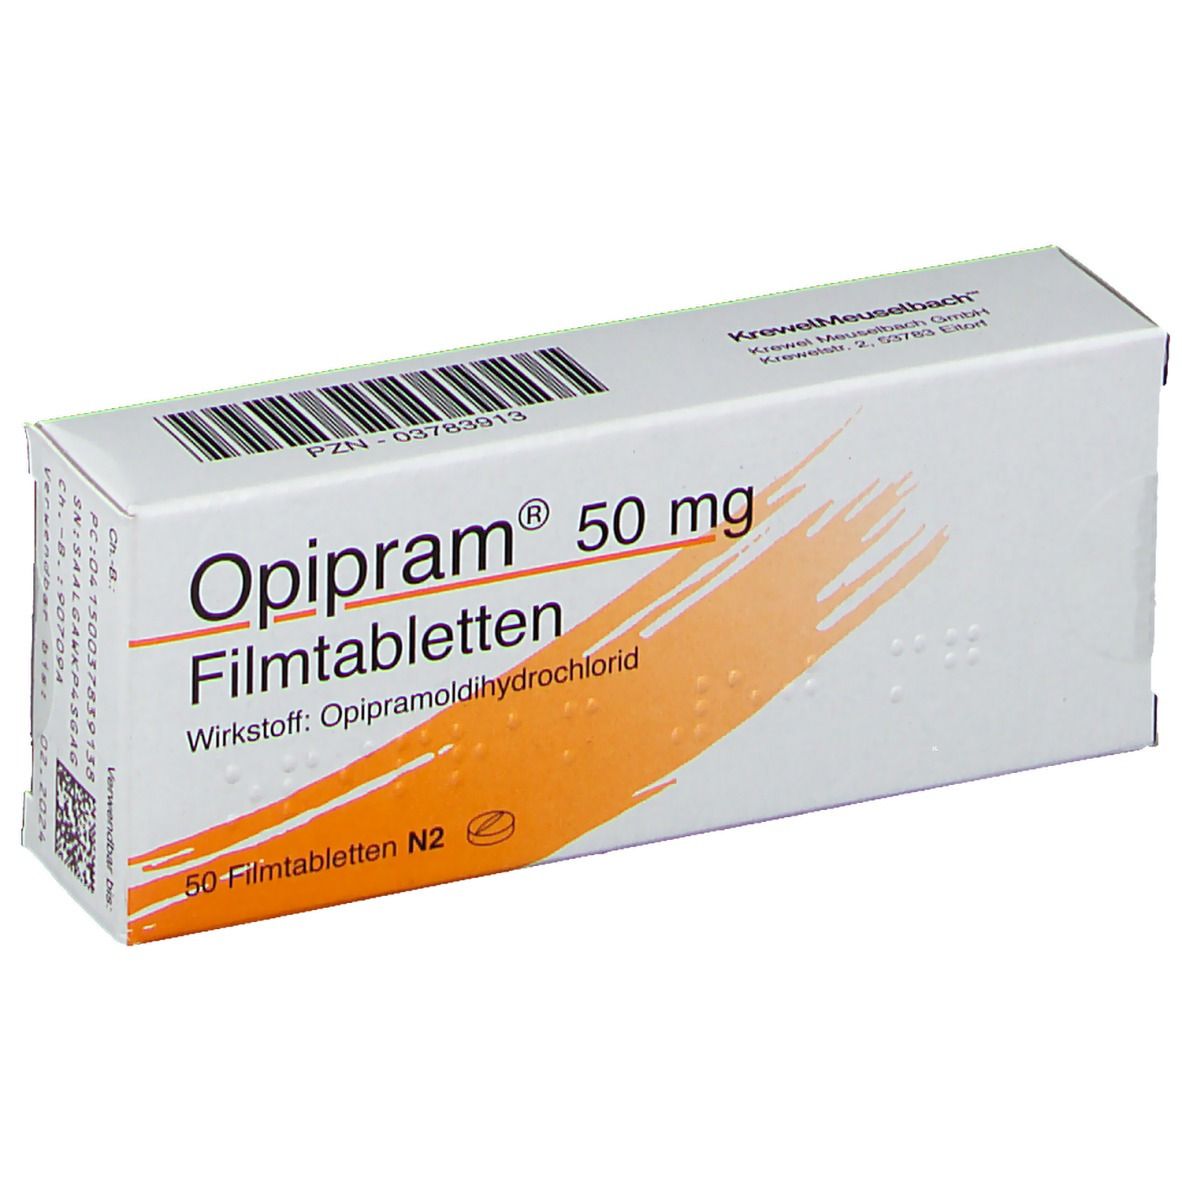 Opipram® 50 mg